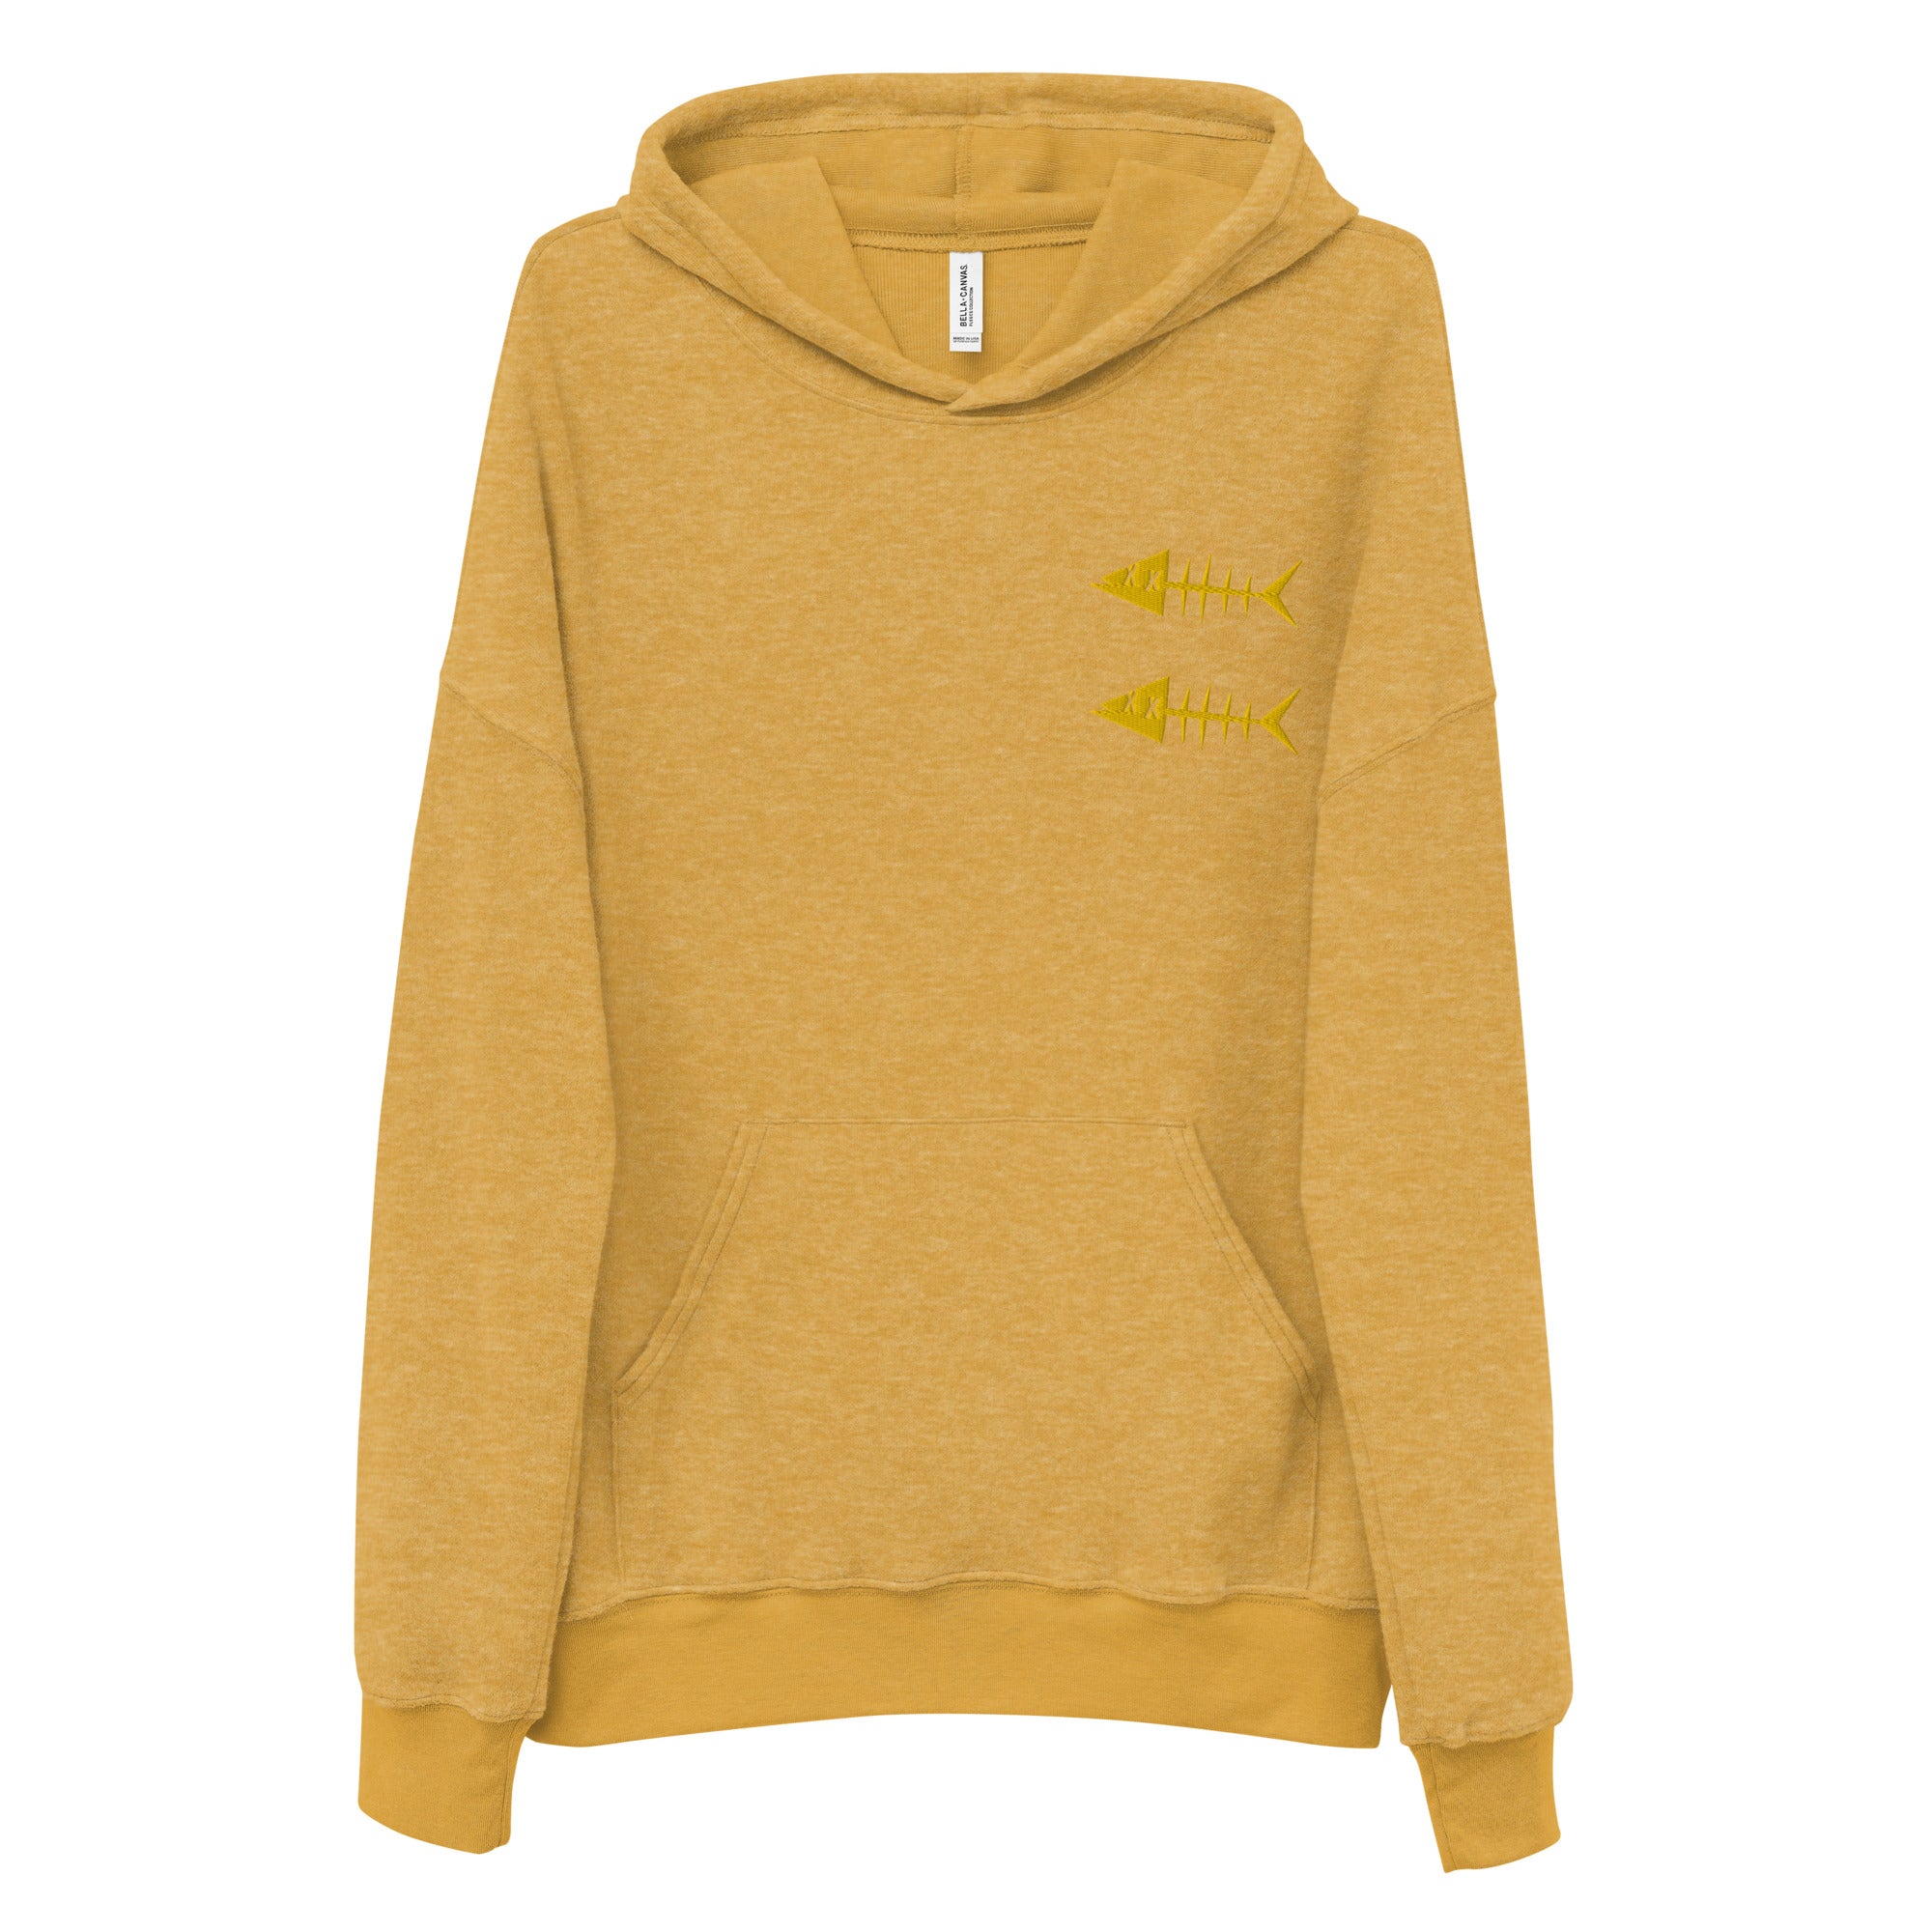 Clishirt© Embroidered Gold Fish Unisex heather mustard sueded fleece hoodie